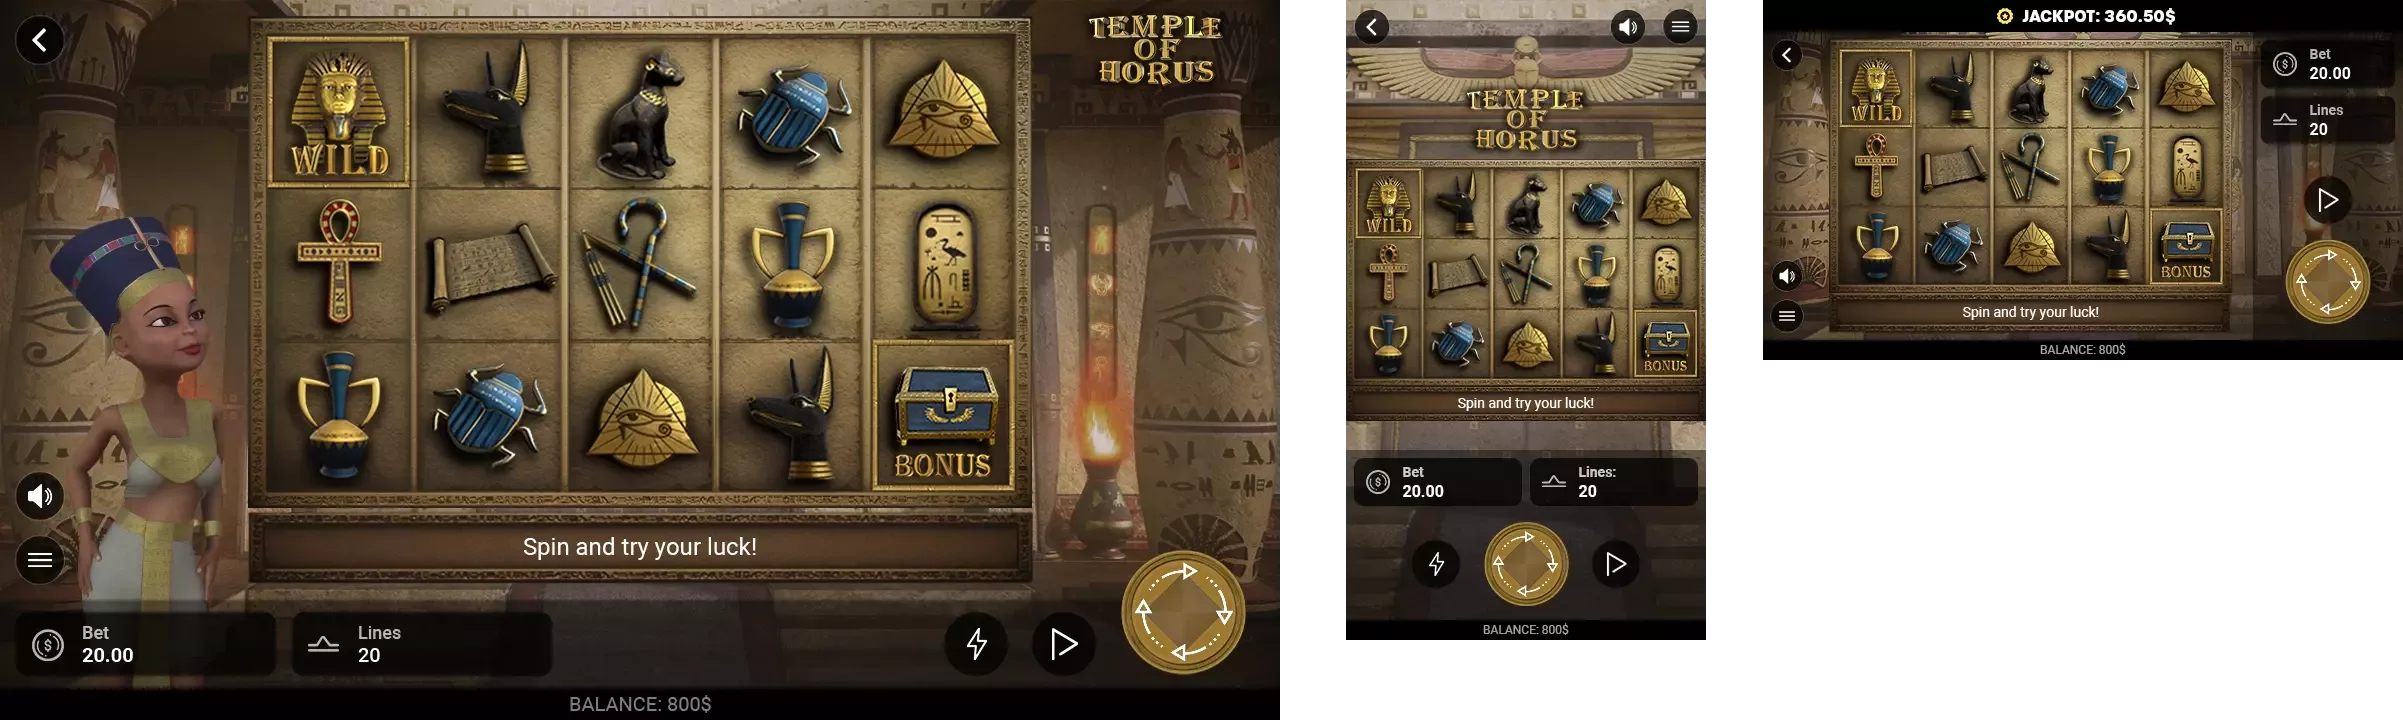 Temple of Horus final render